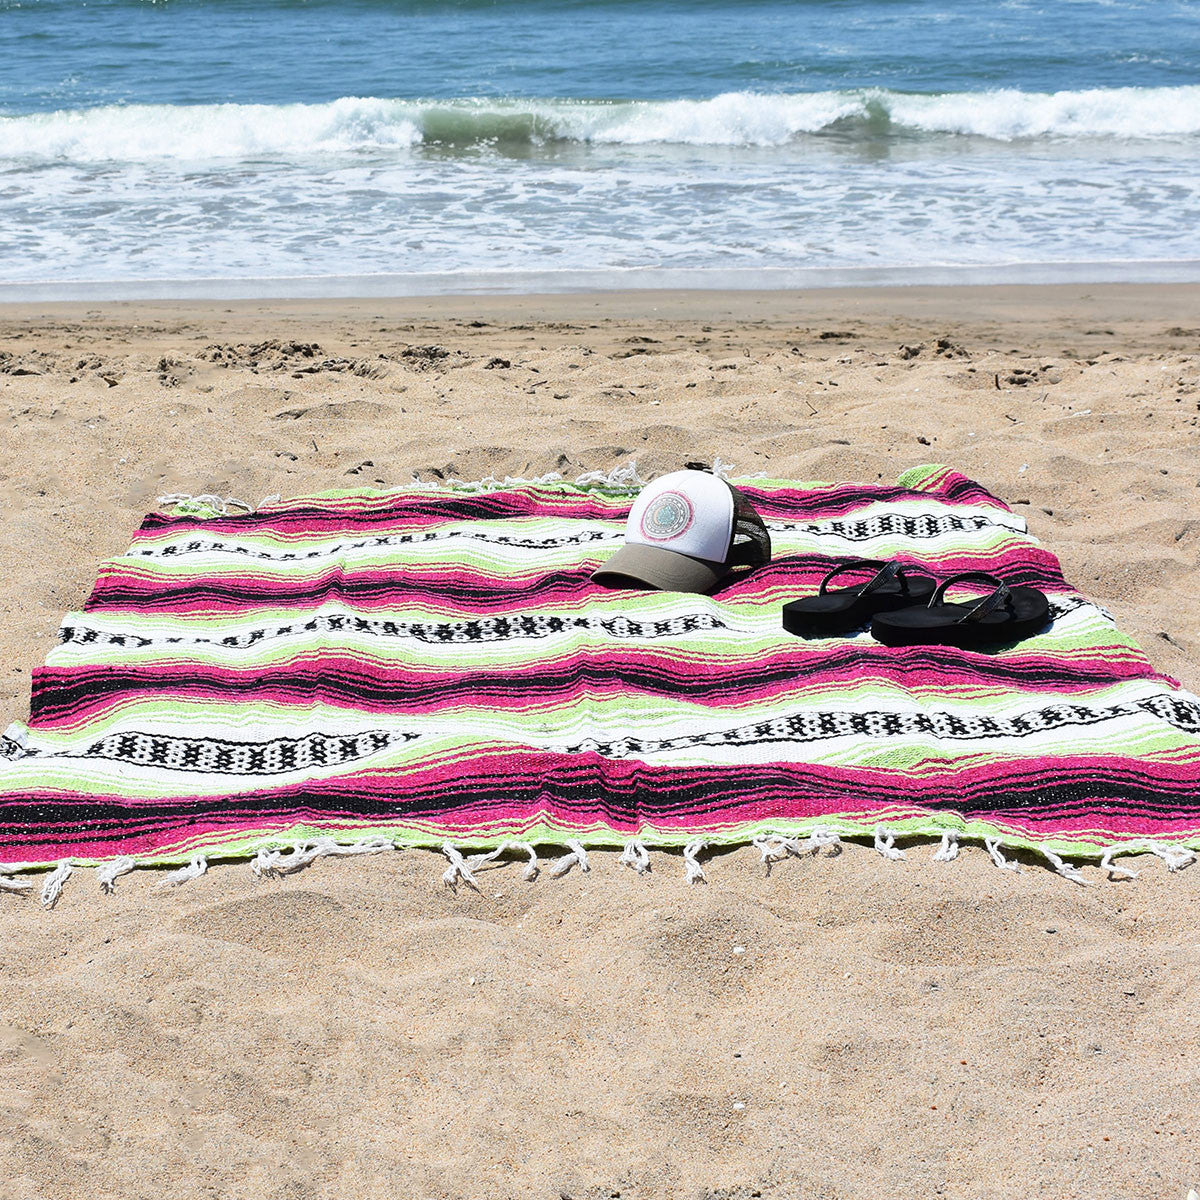 Boho beach blanket for cool summer style - Neon Candy Bohemian Fiesta Blanket.